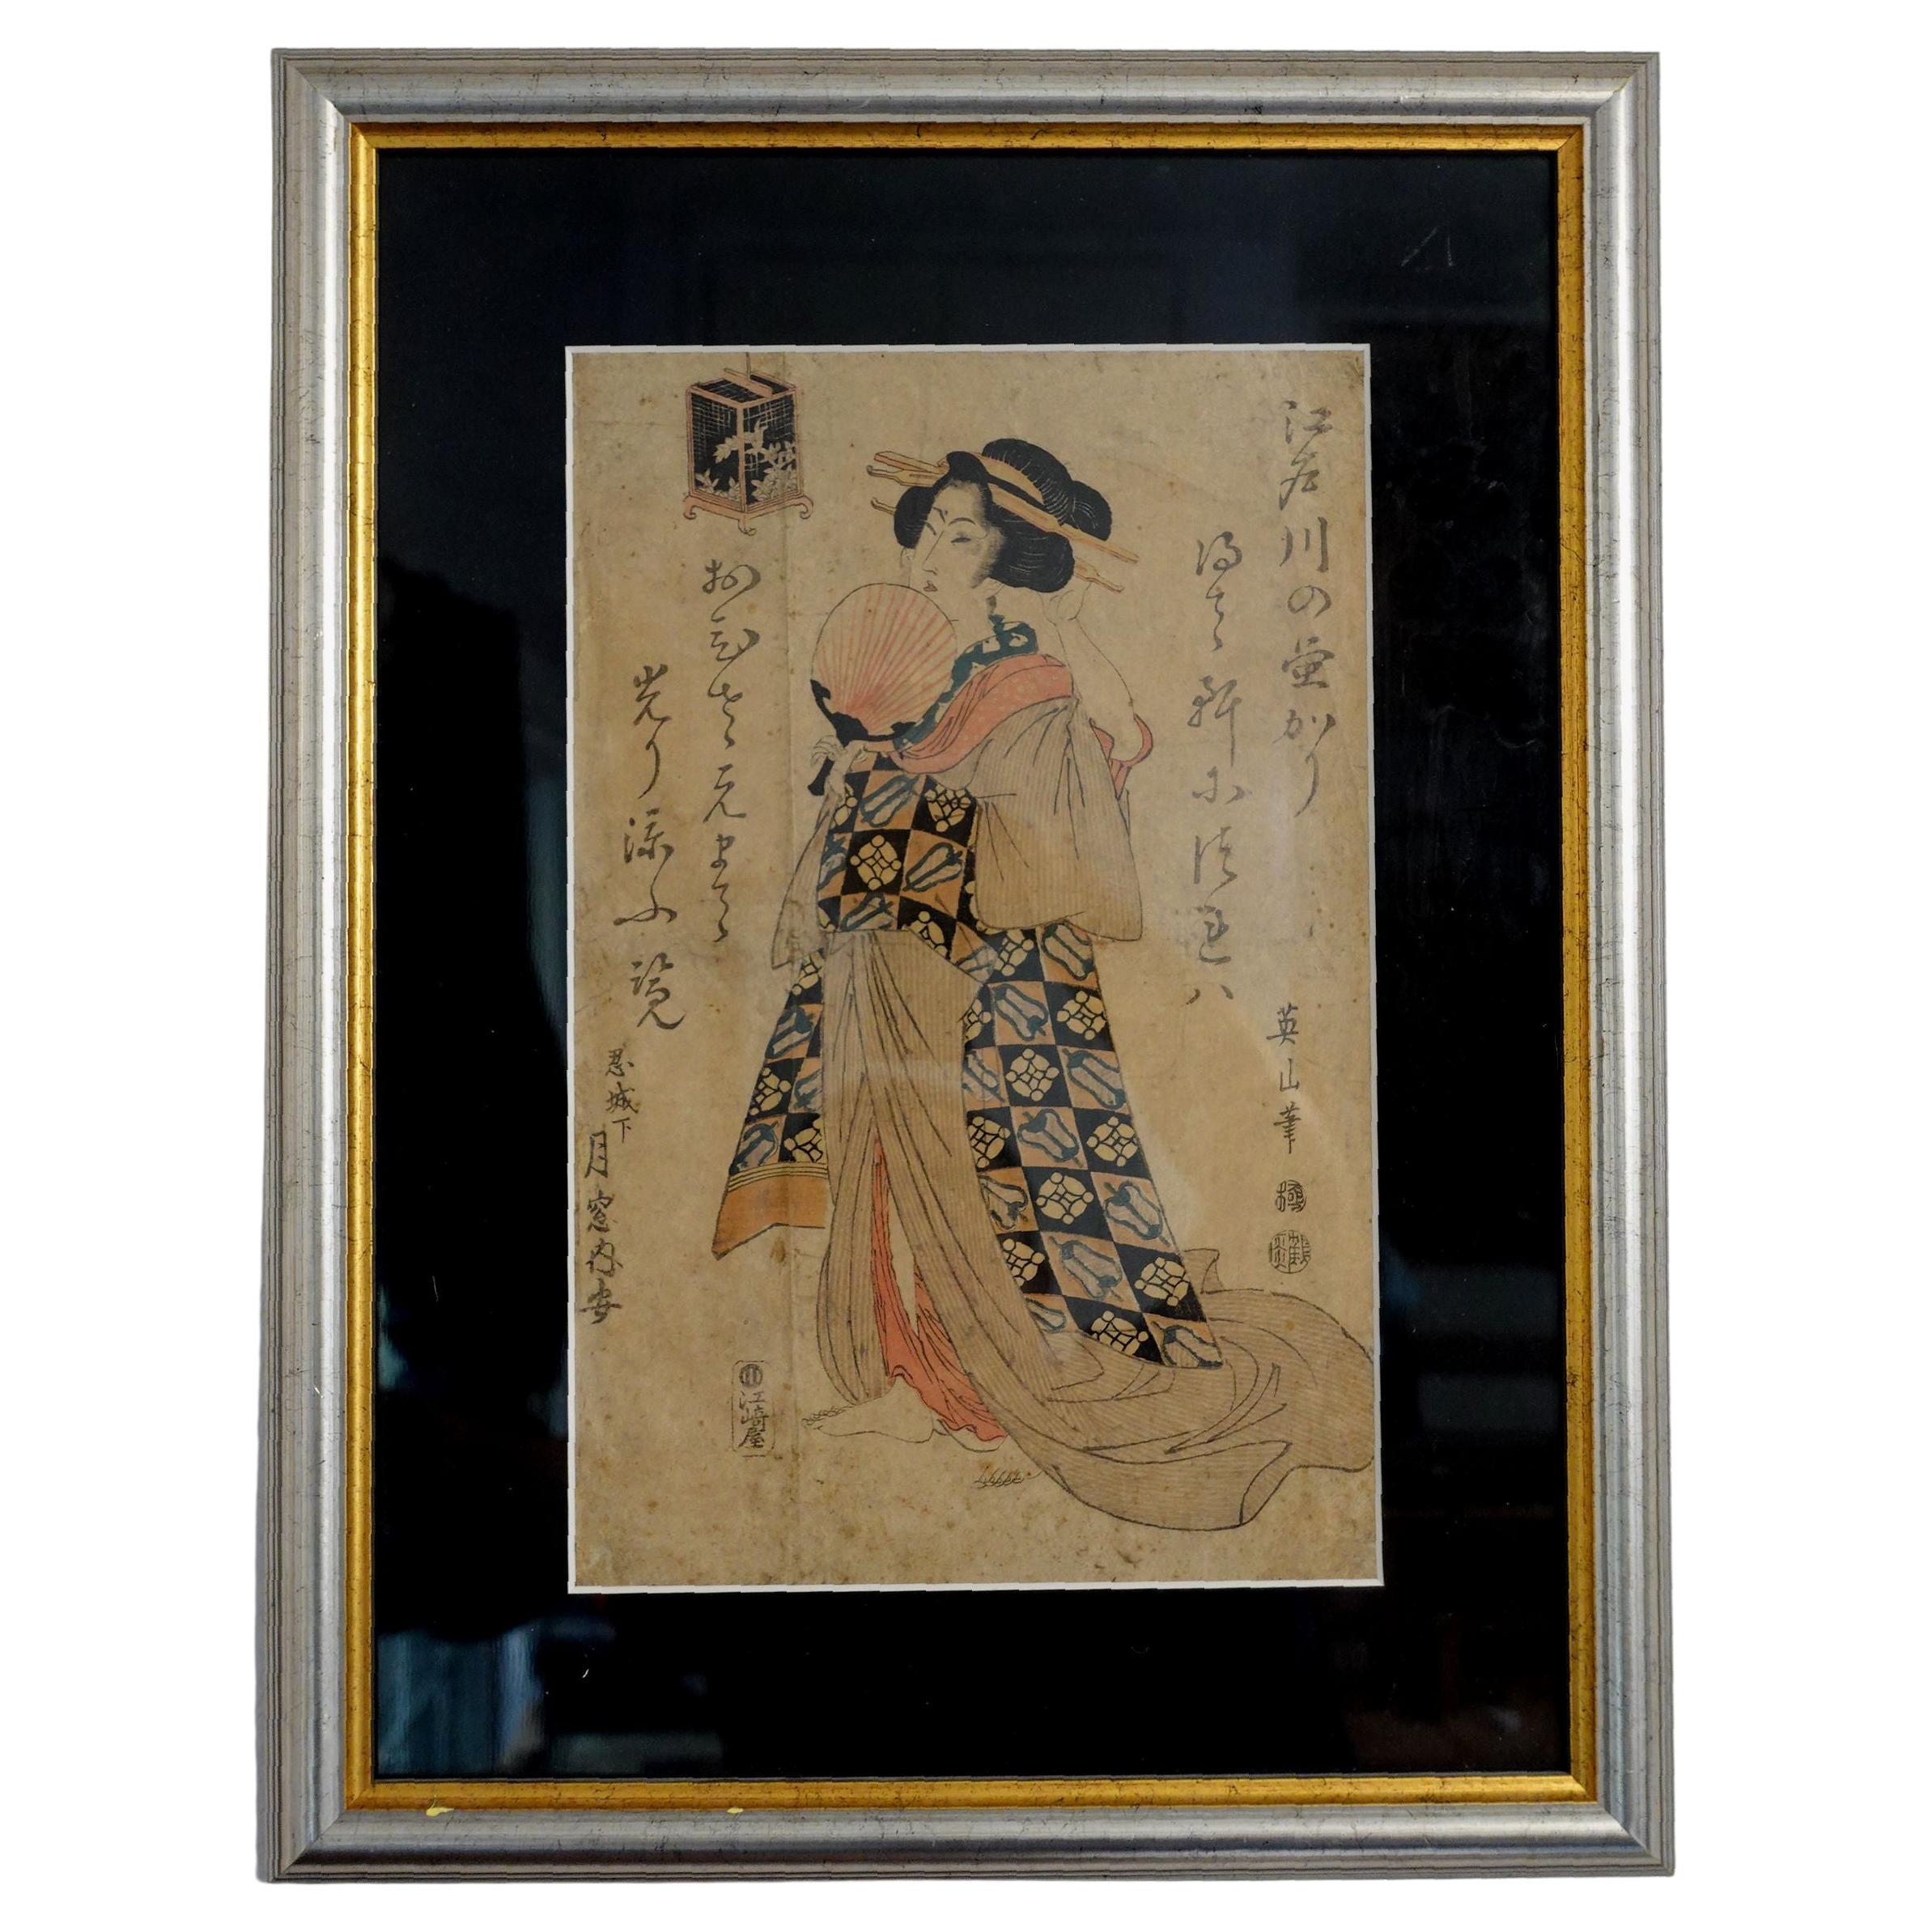 Japanese Woodblock Print " The Geisha" by Kikukawa Eizan (菊川英山) RicJ002 For Sale